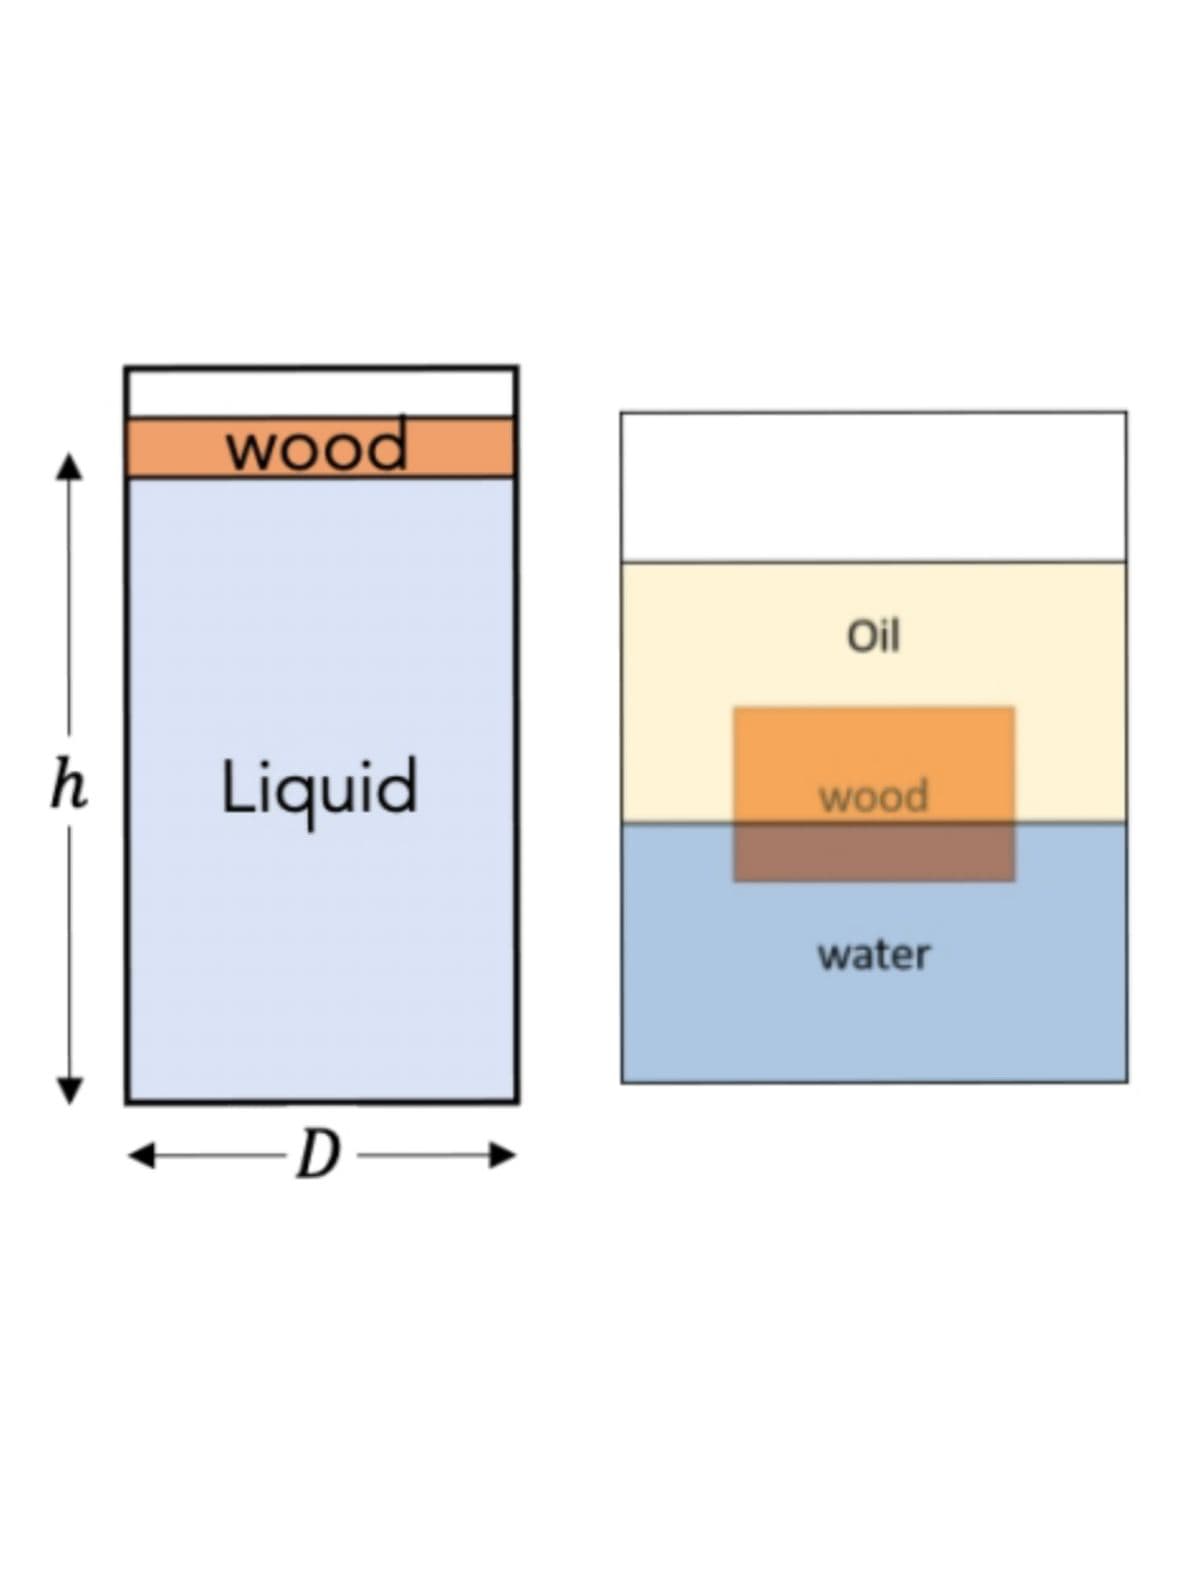 h
wood
Liquid
D-
Oil
wood
water